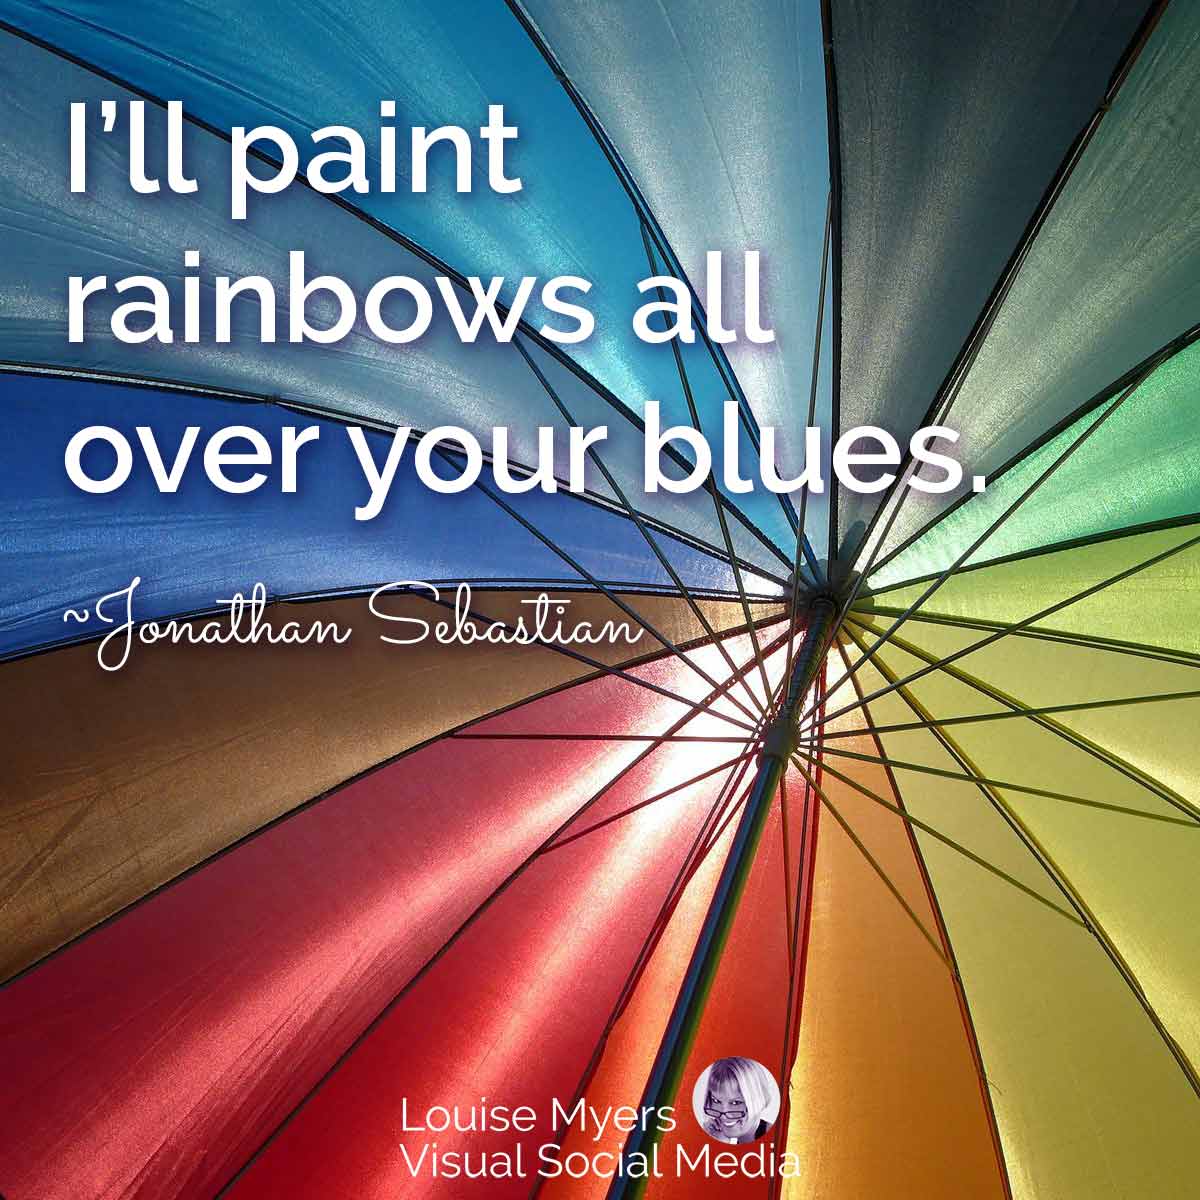 closeup of rainbow umbrella has quote, I’ll paint rainbows all over your blues.